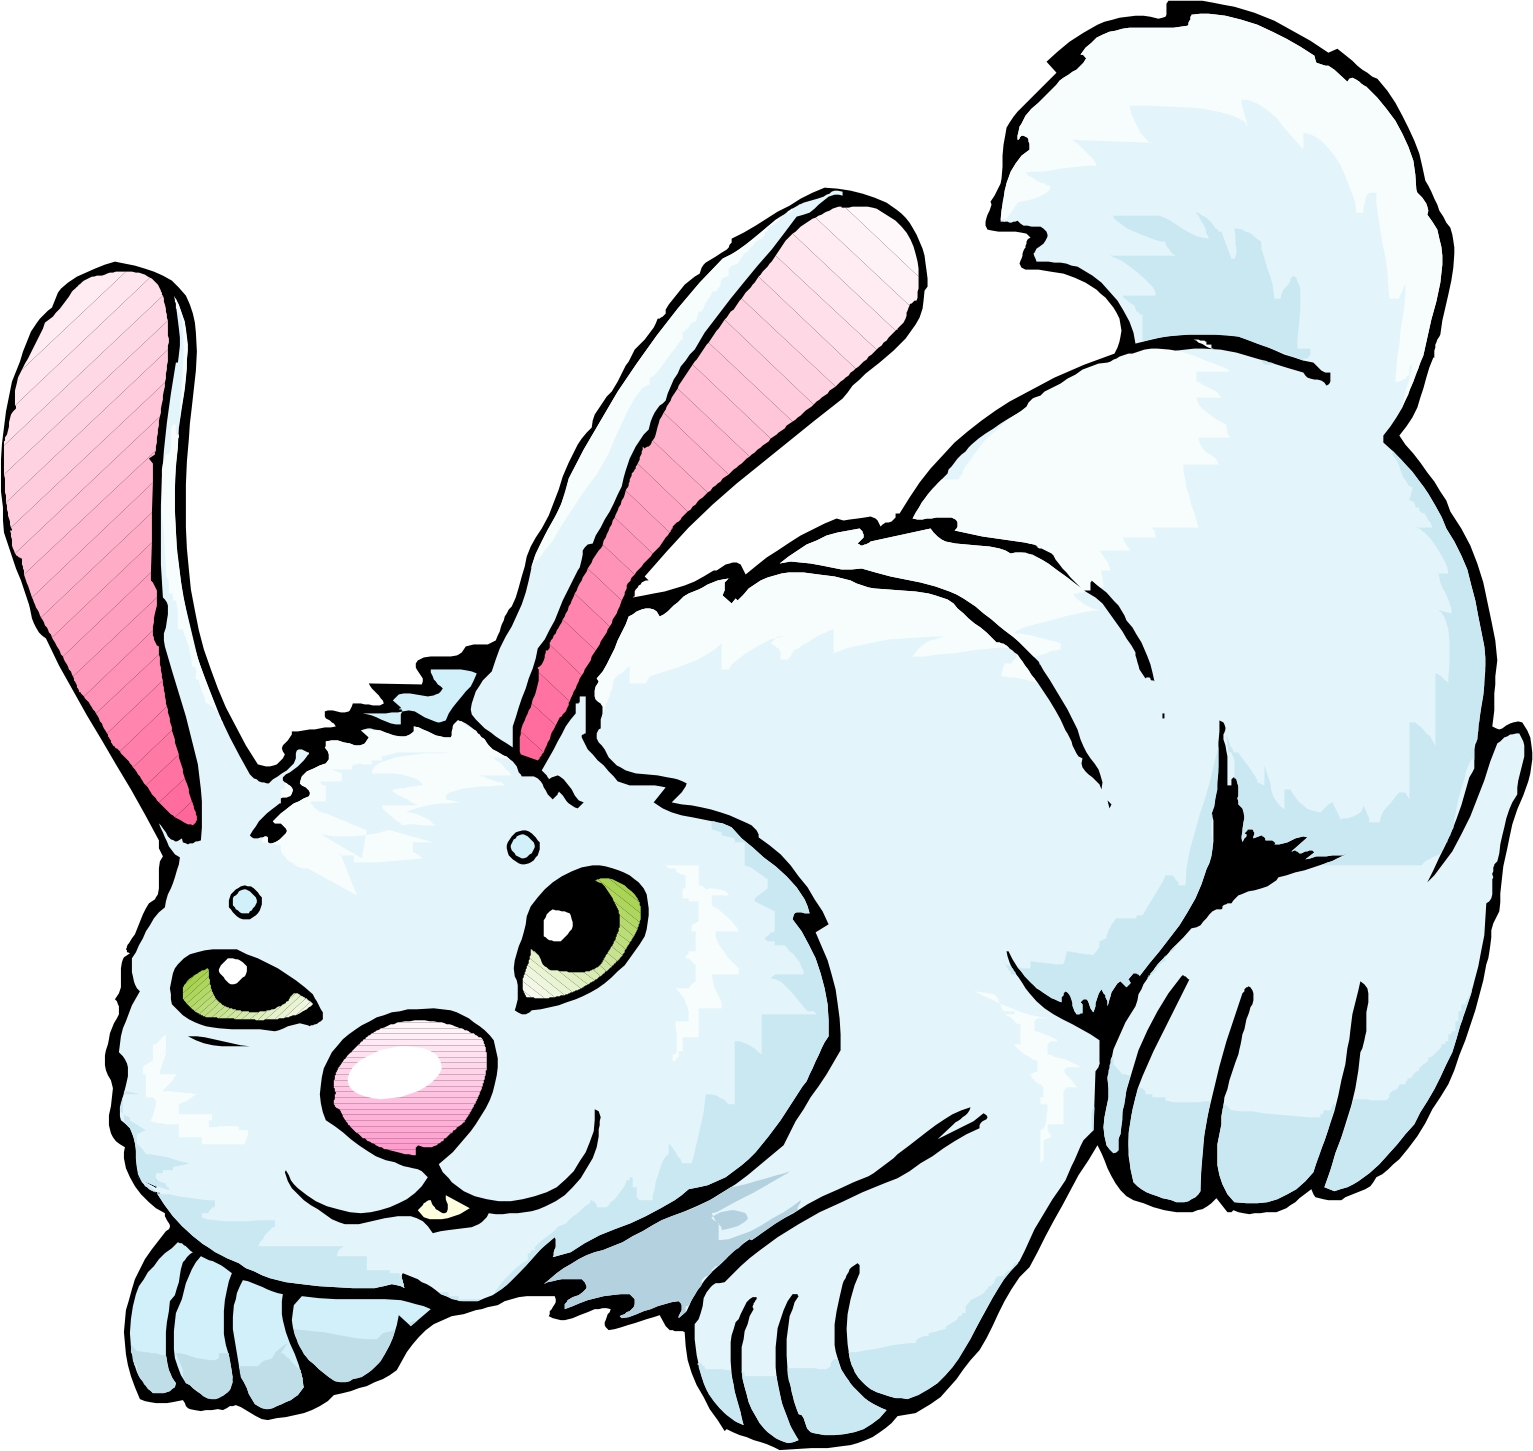 Rabbits Cartoon Pictures - ClipArt Best